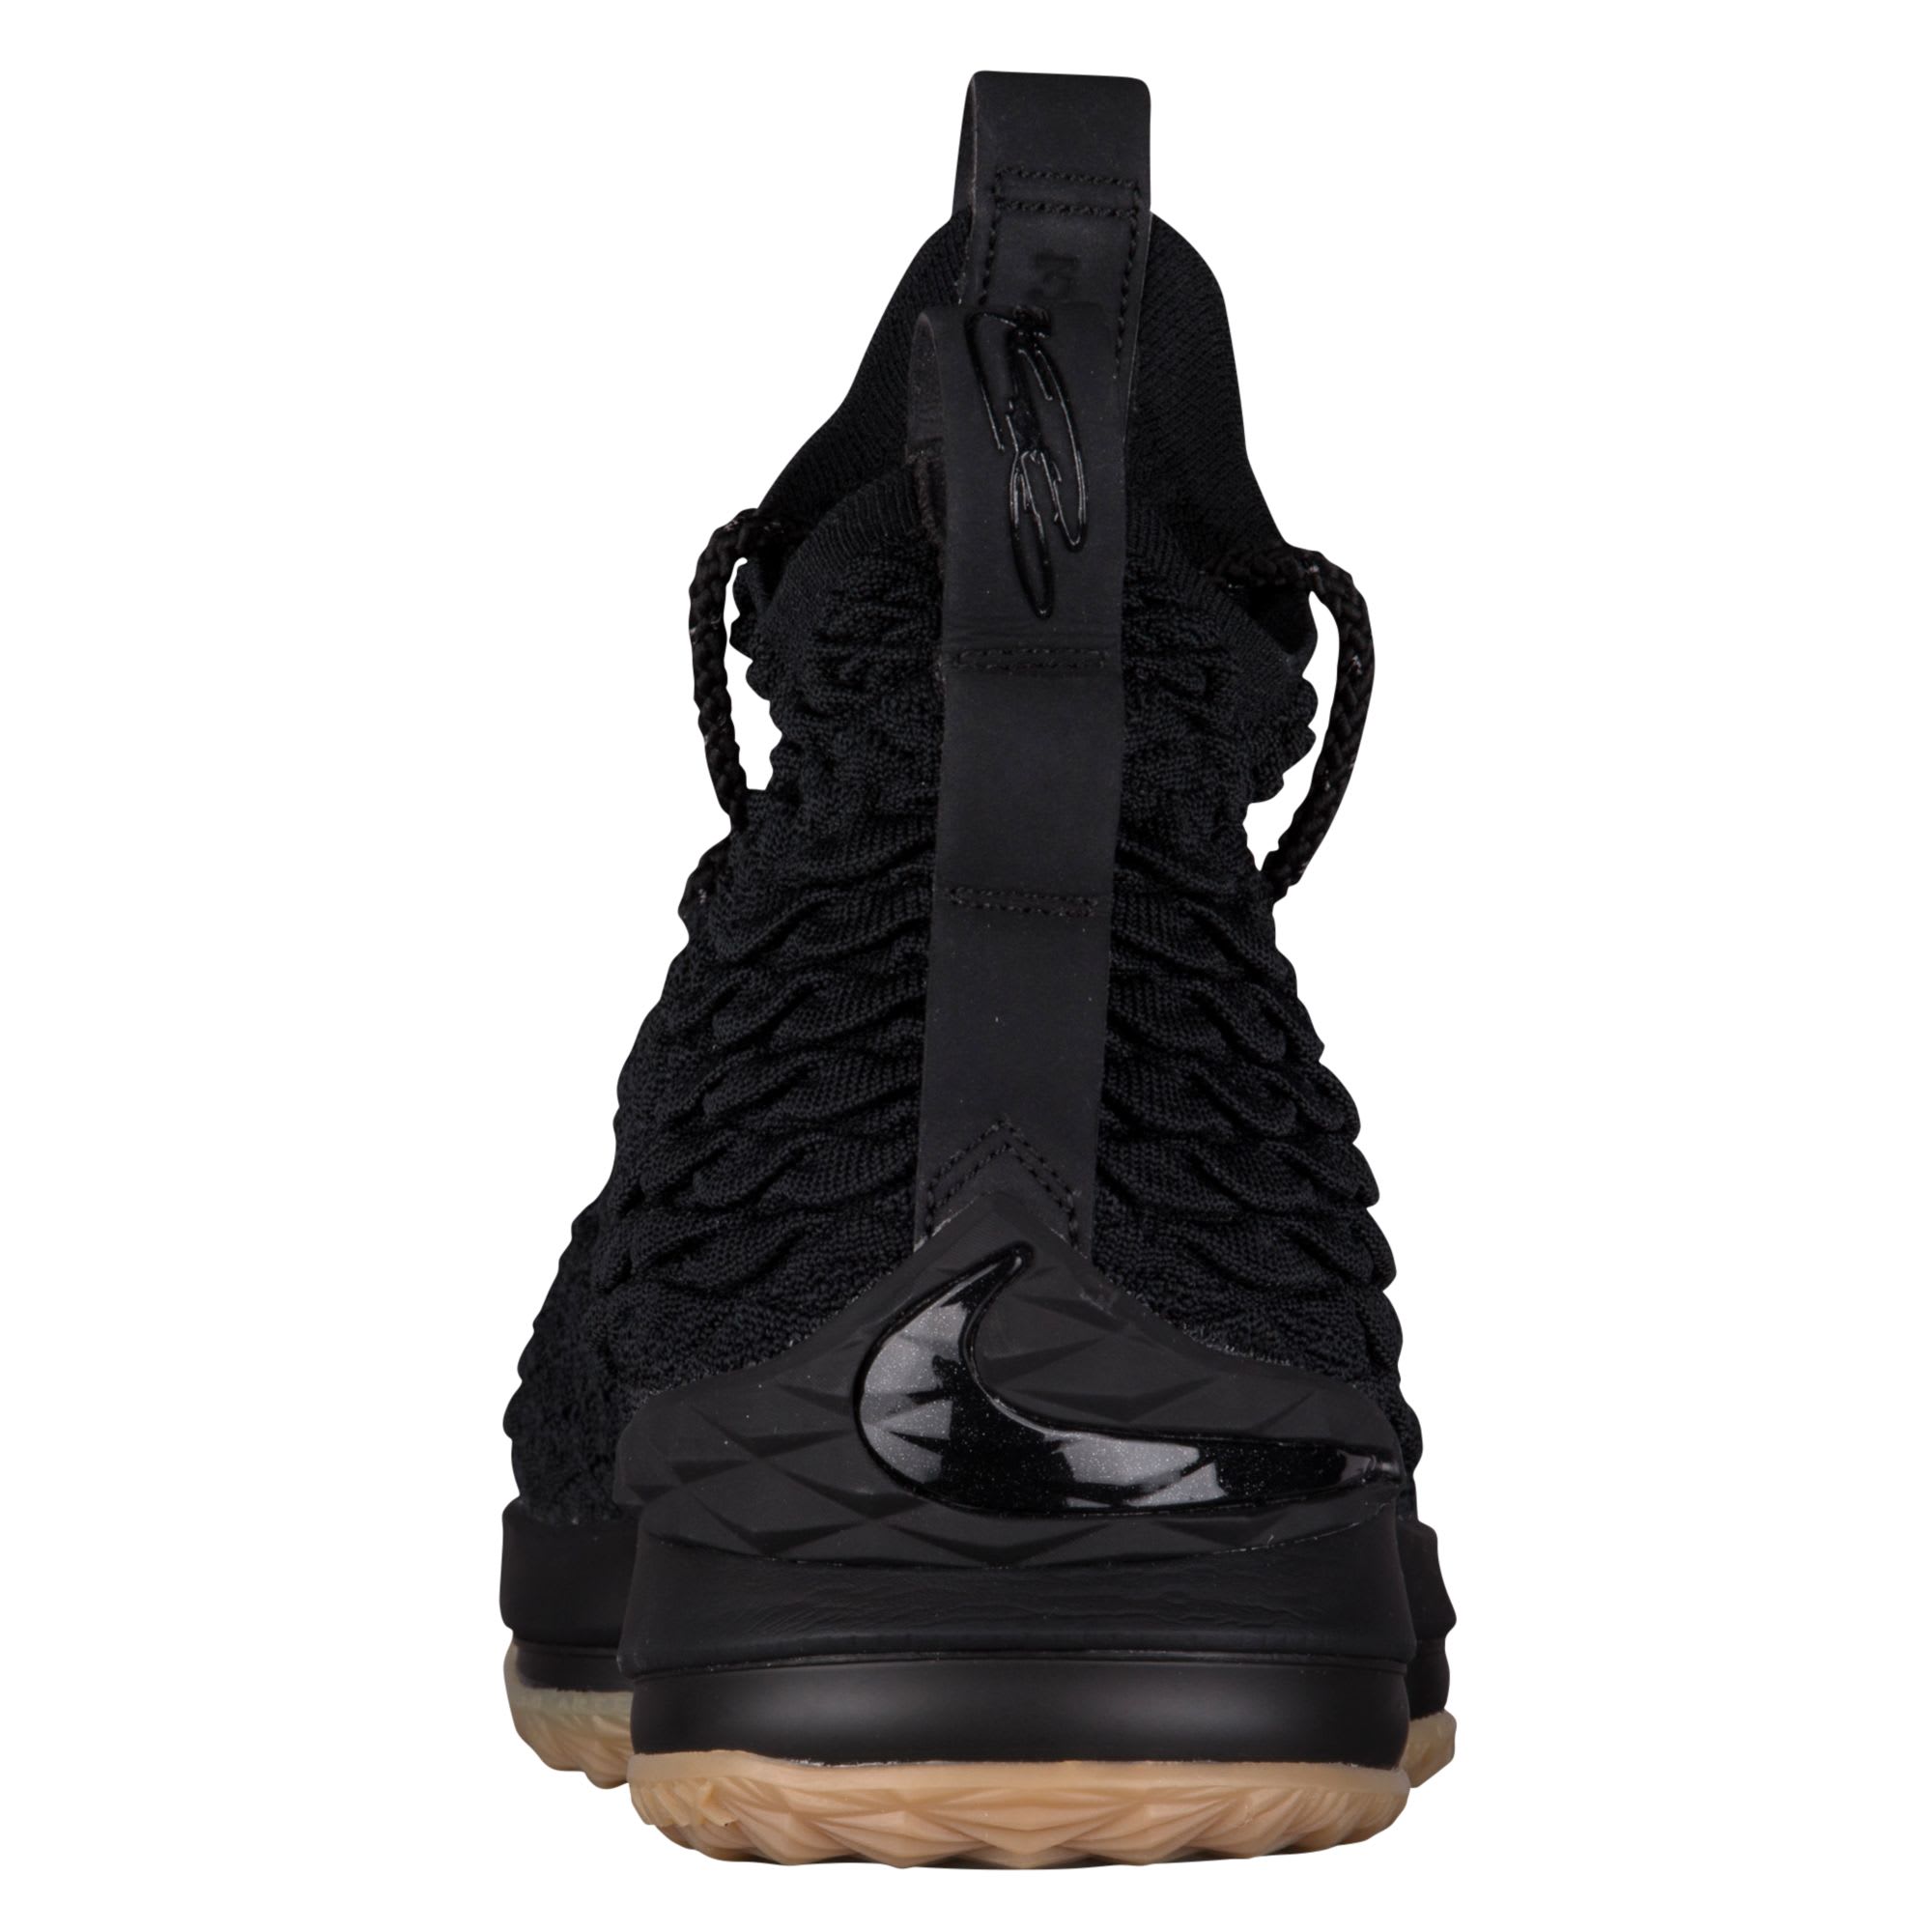 Nike LeBron 15 Black Gum Release Date 897648-300 Heel